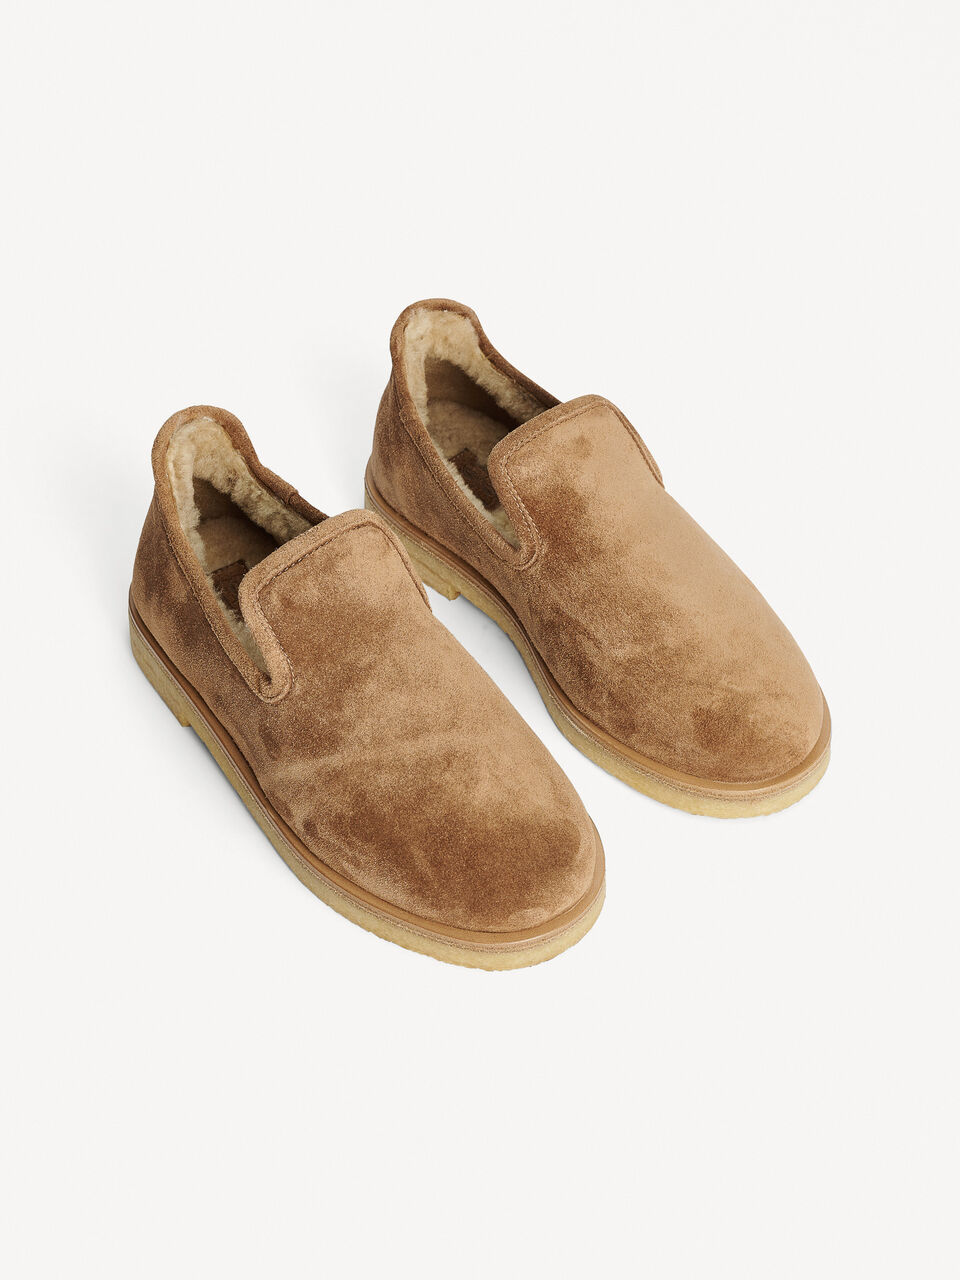 Romine slippers - Buy Accessories online